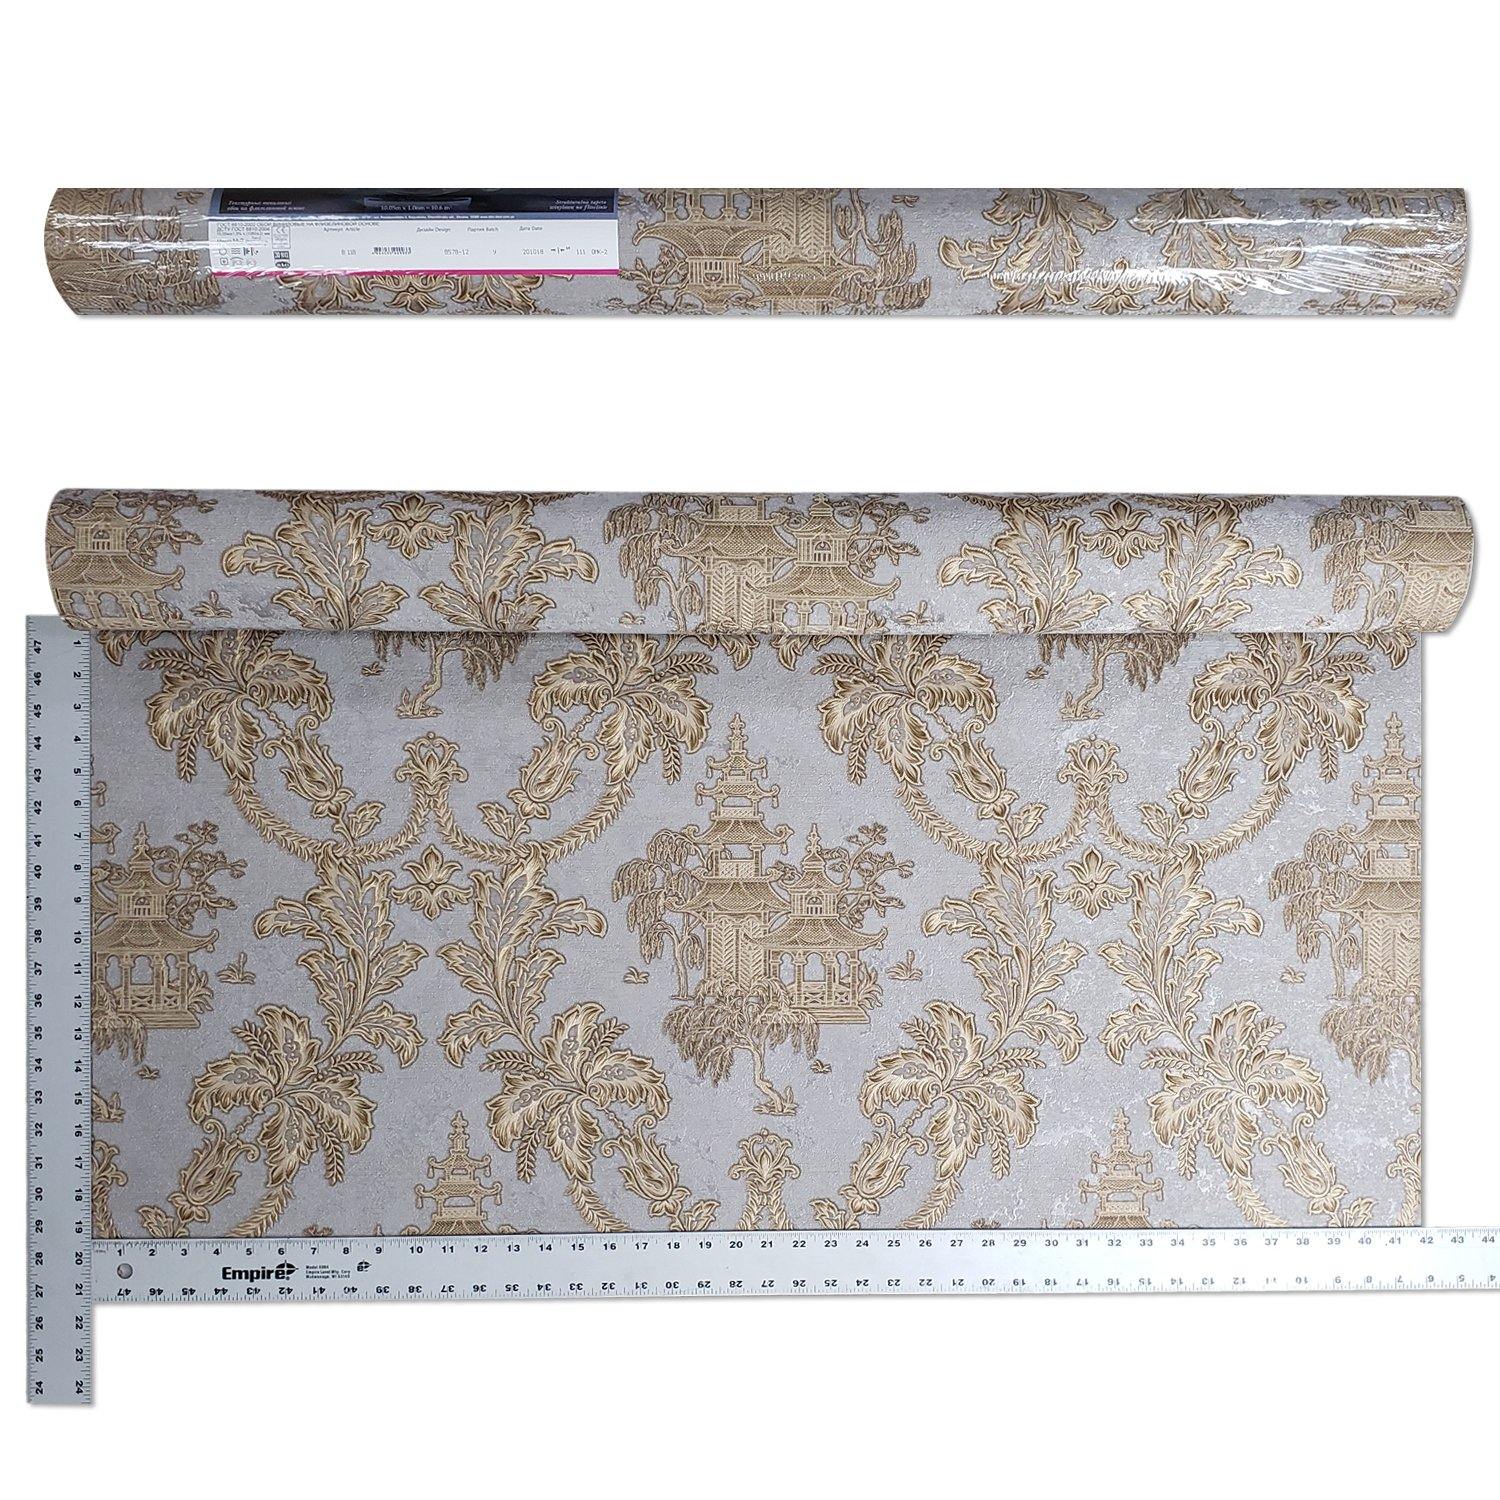 2972-86175 Yawen Gold String Wallpaper – wallcoveringsmart